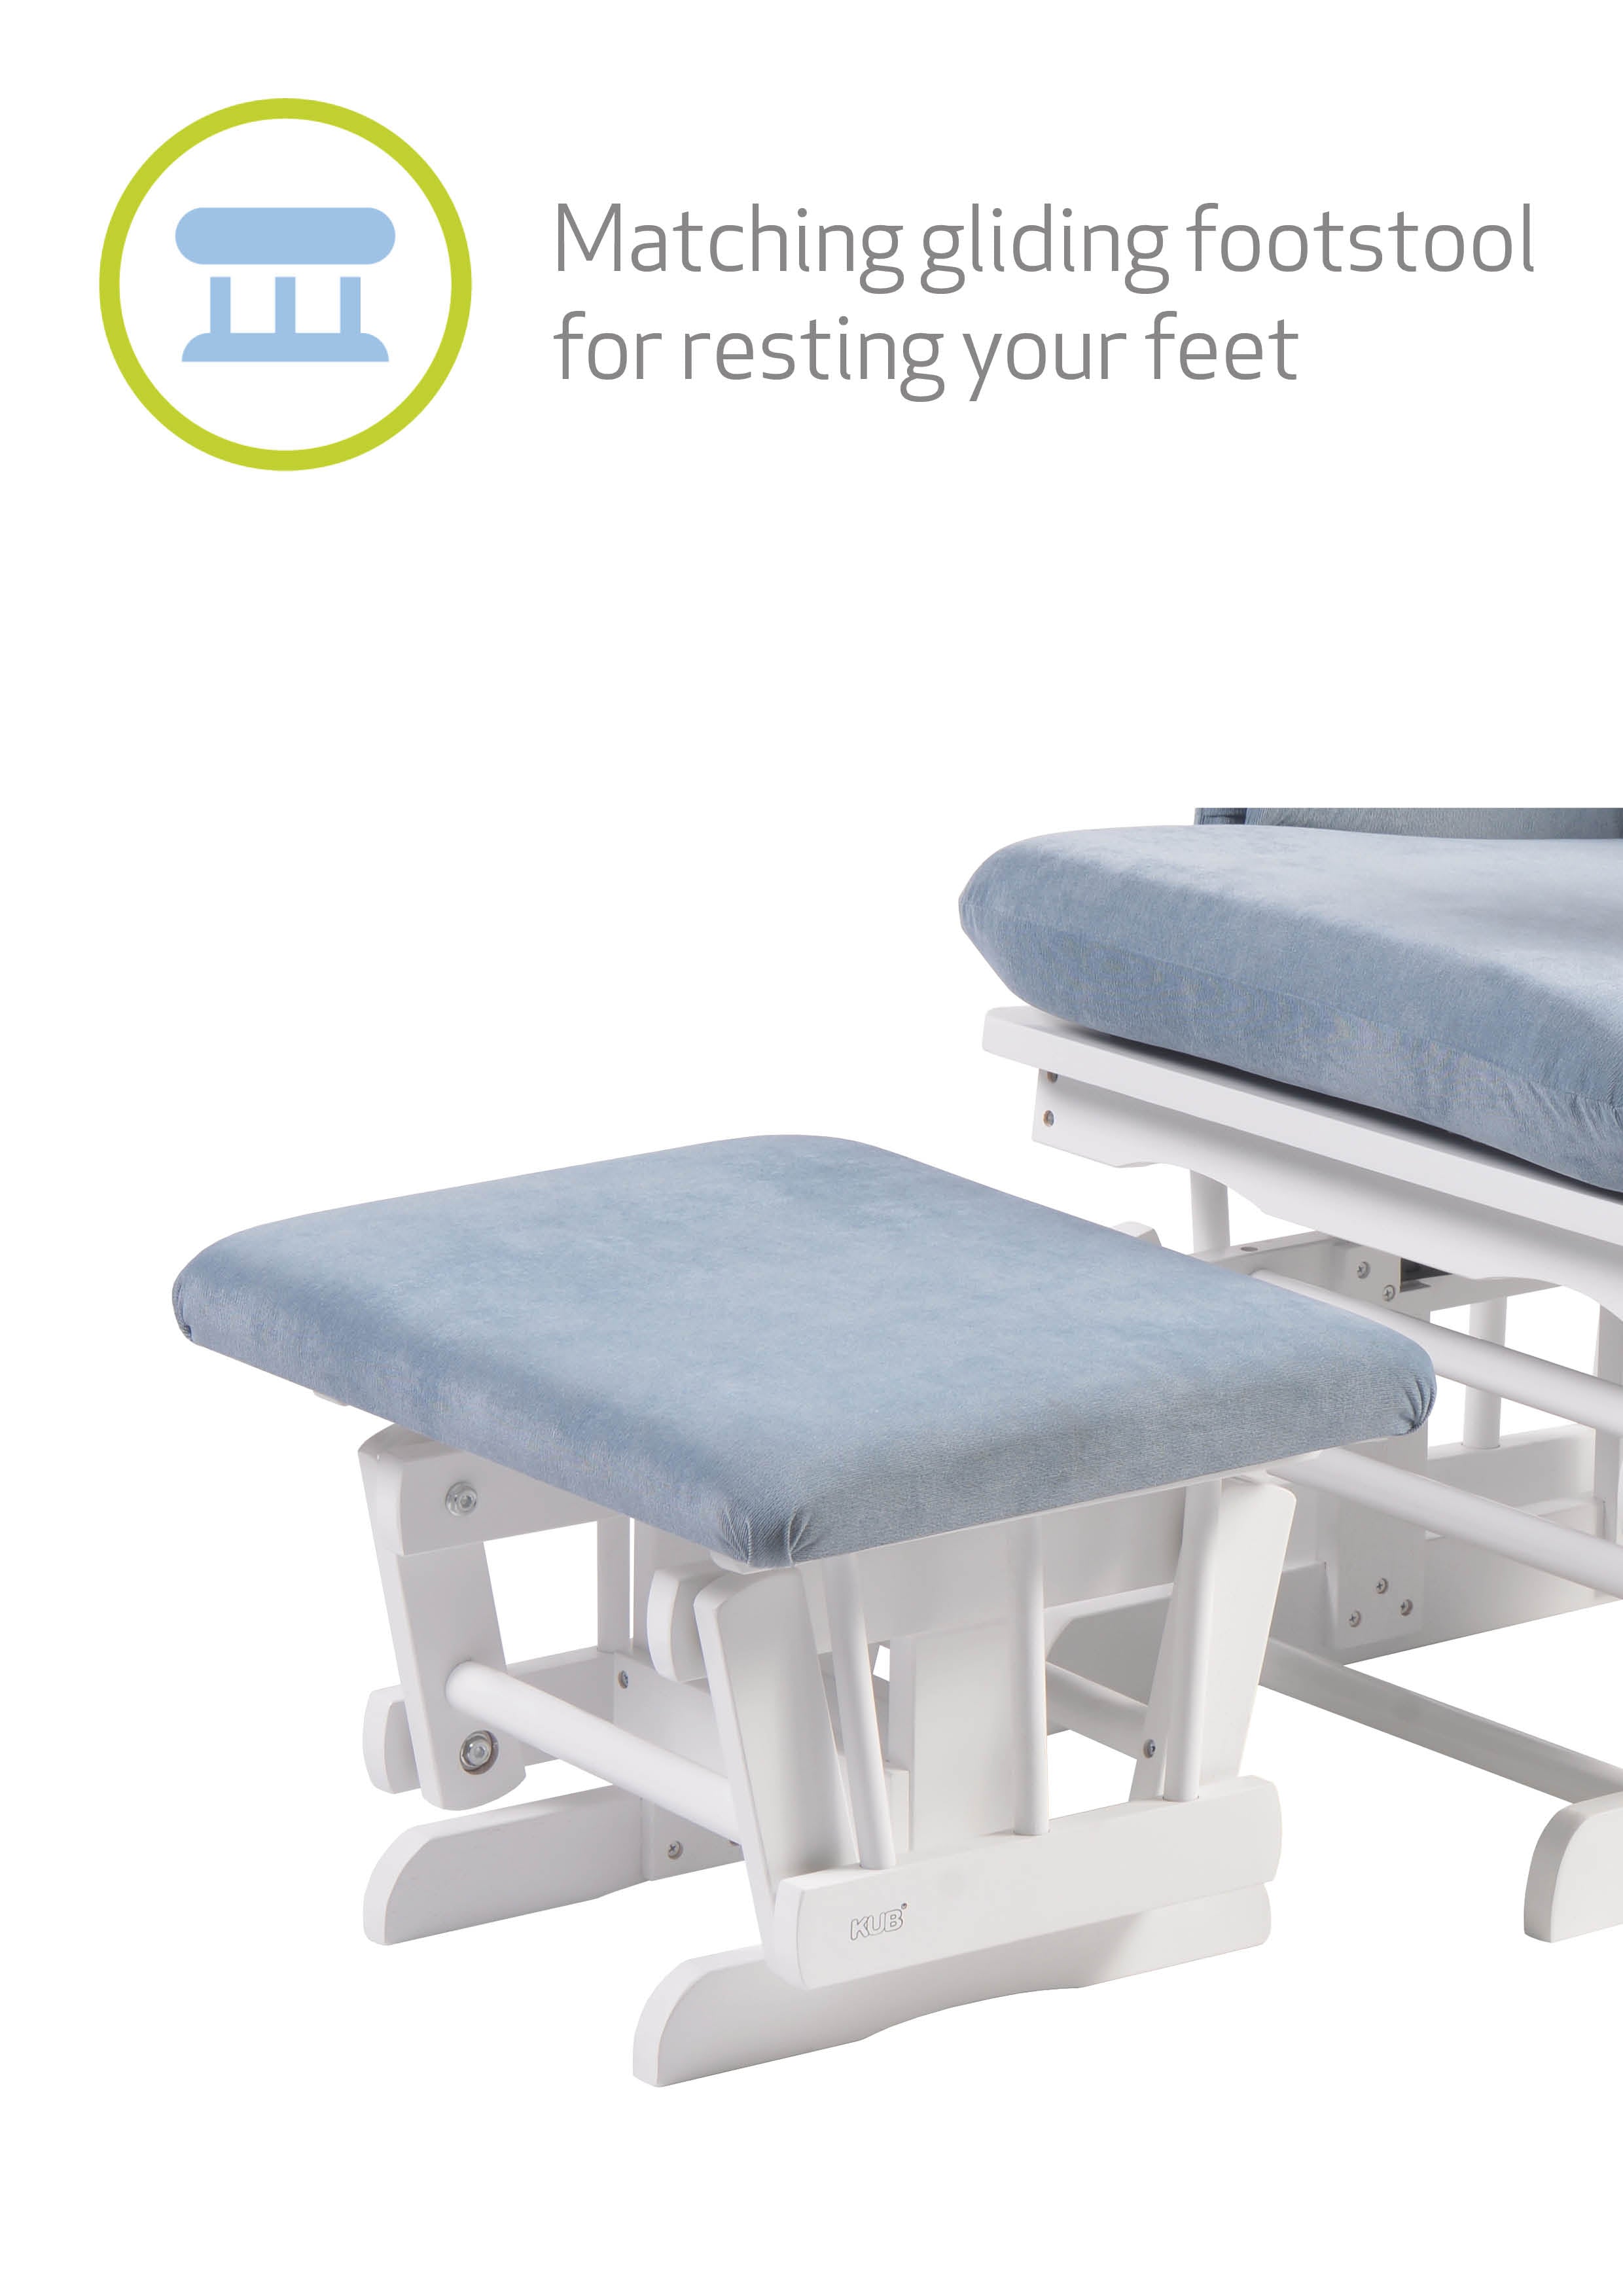 Chatsworth Nursing Chair and Footstool Grey